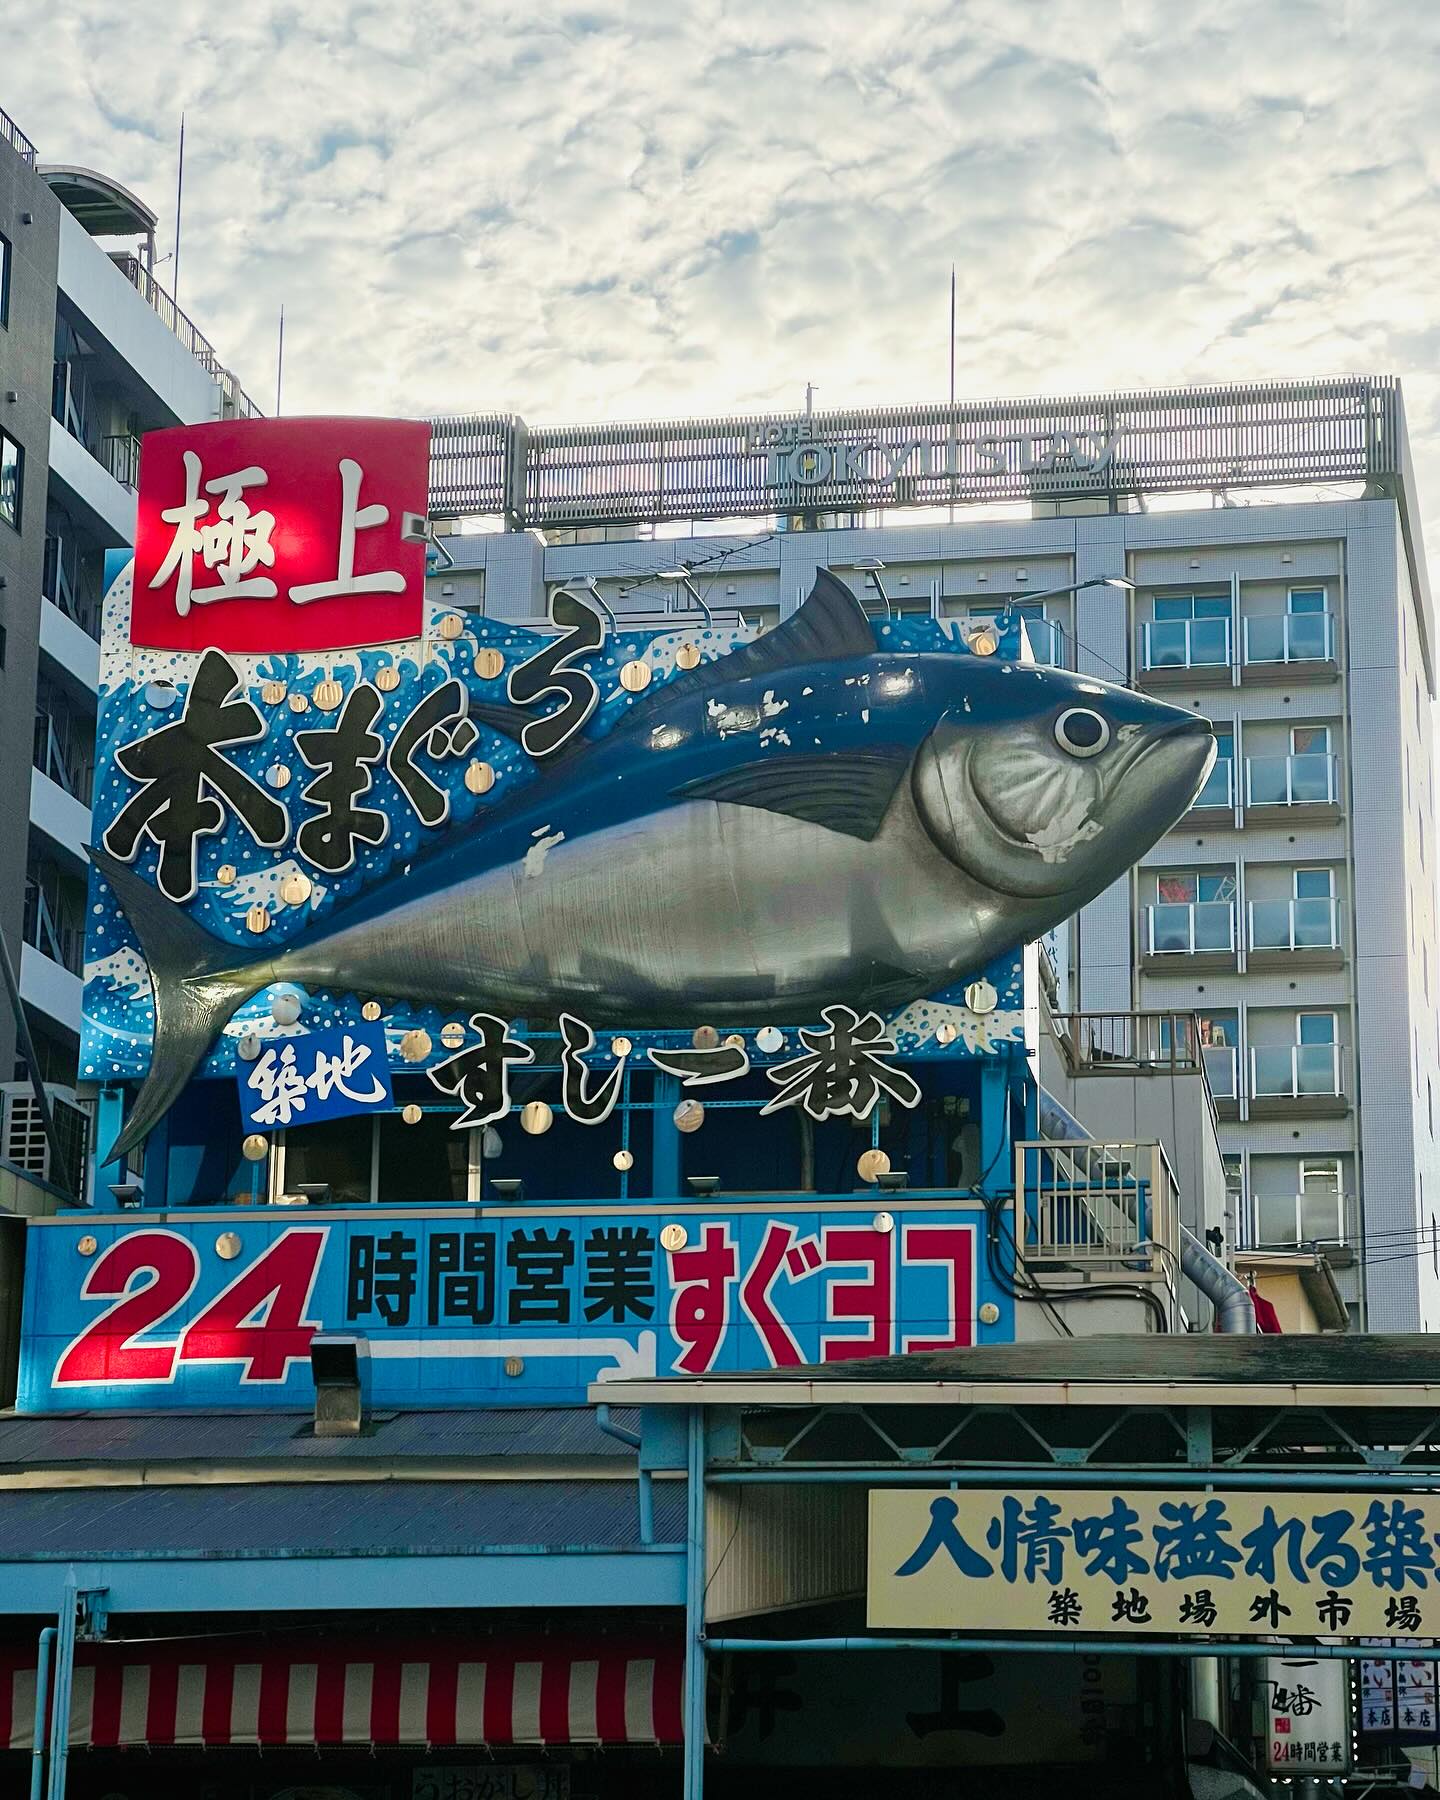 Enjoy Tsukiji Outer Market